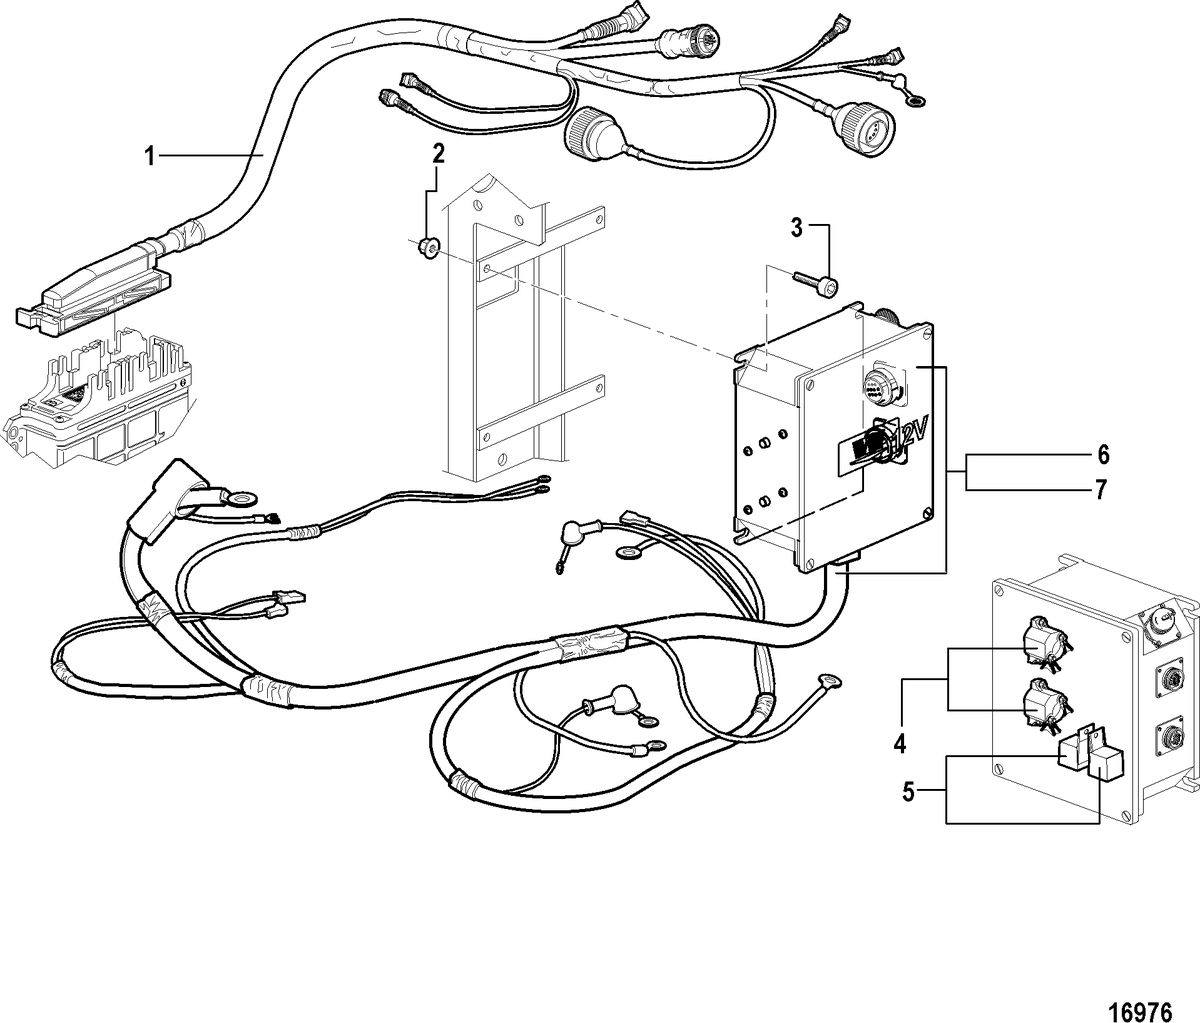 MERCRUISER CUMMINS/MERCRUISER 4.2 UNIFICATION Electrical Box and Components